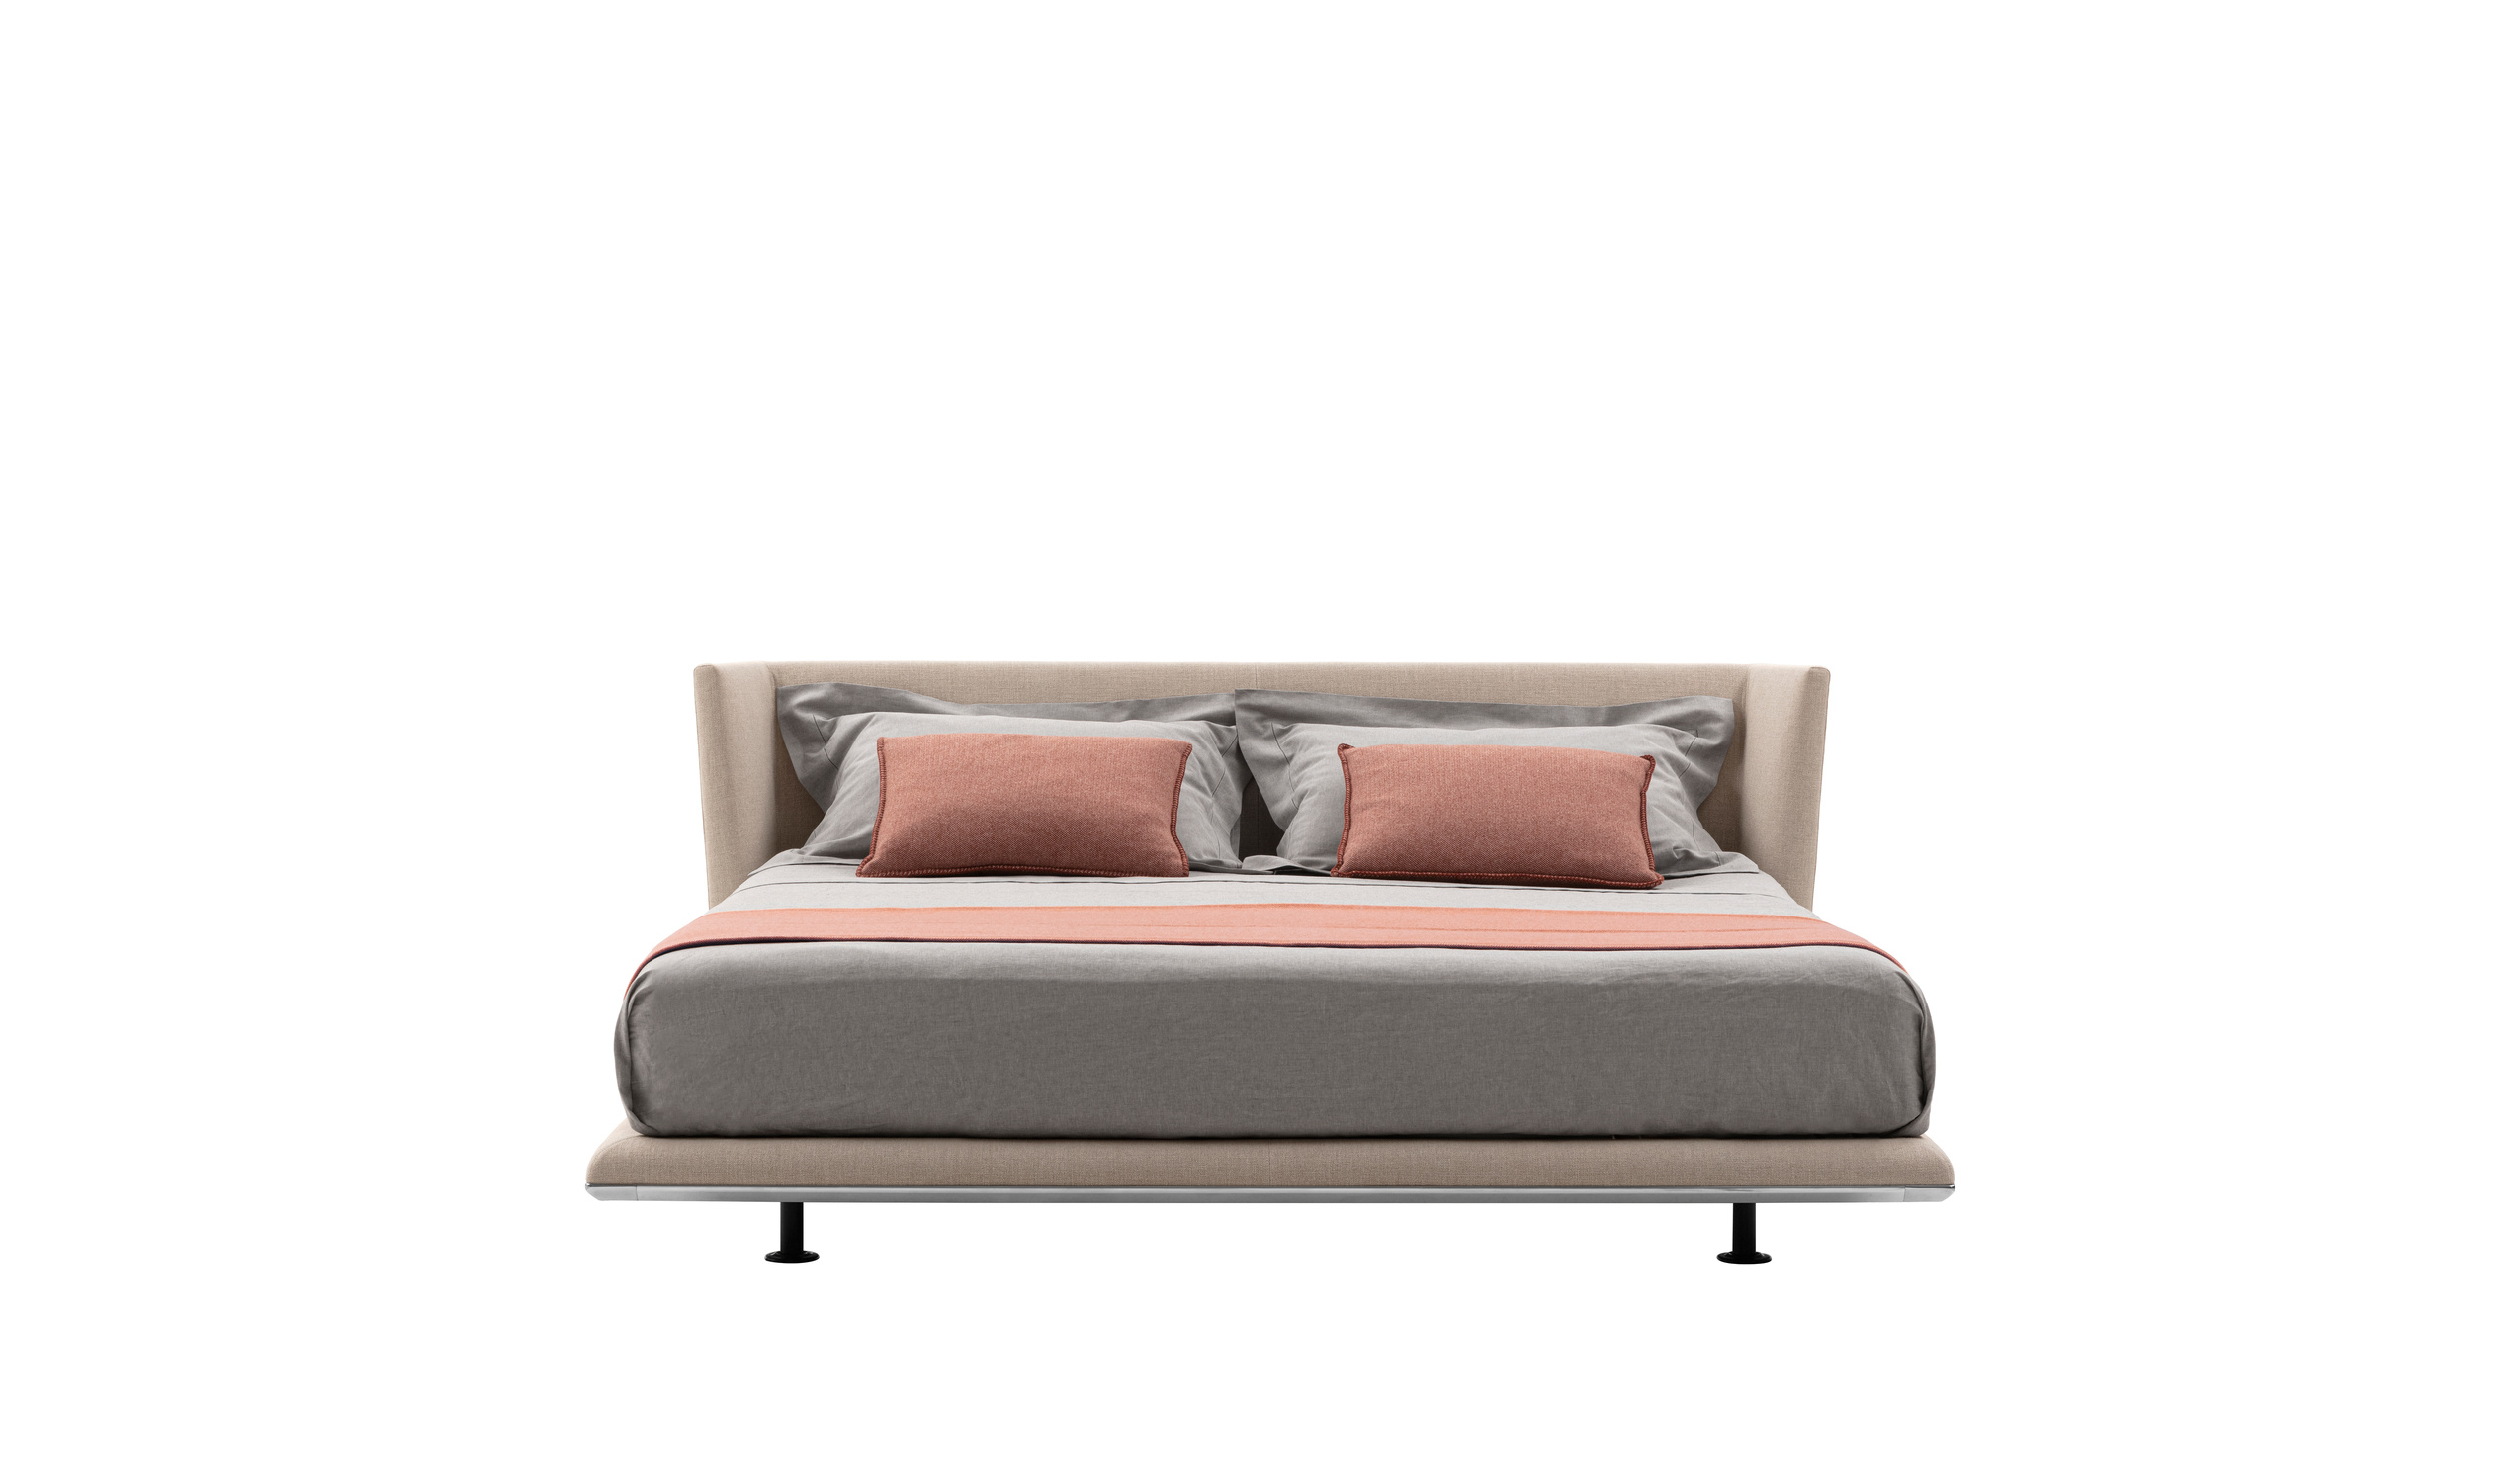 Designer Italian modern beds - Noonu Beds 1